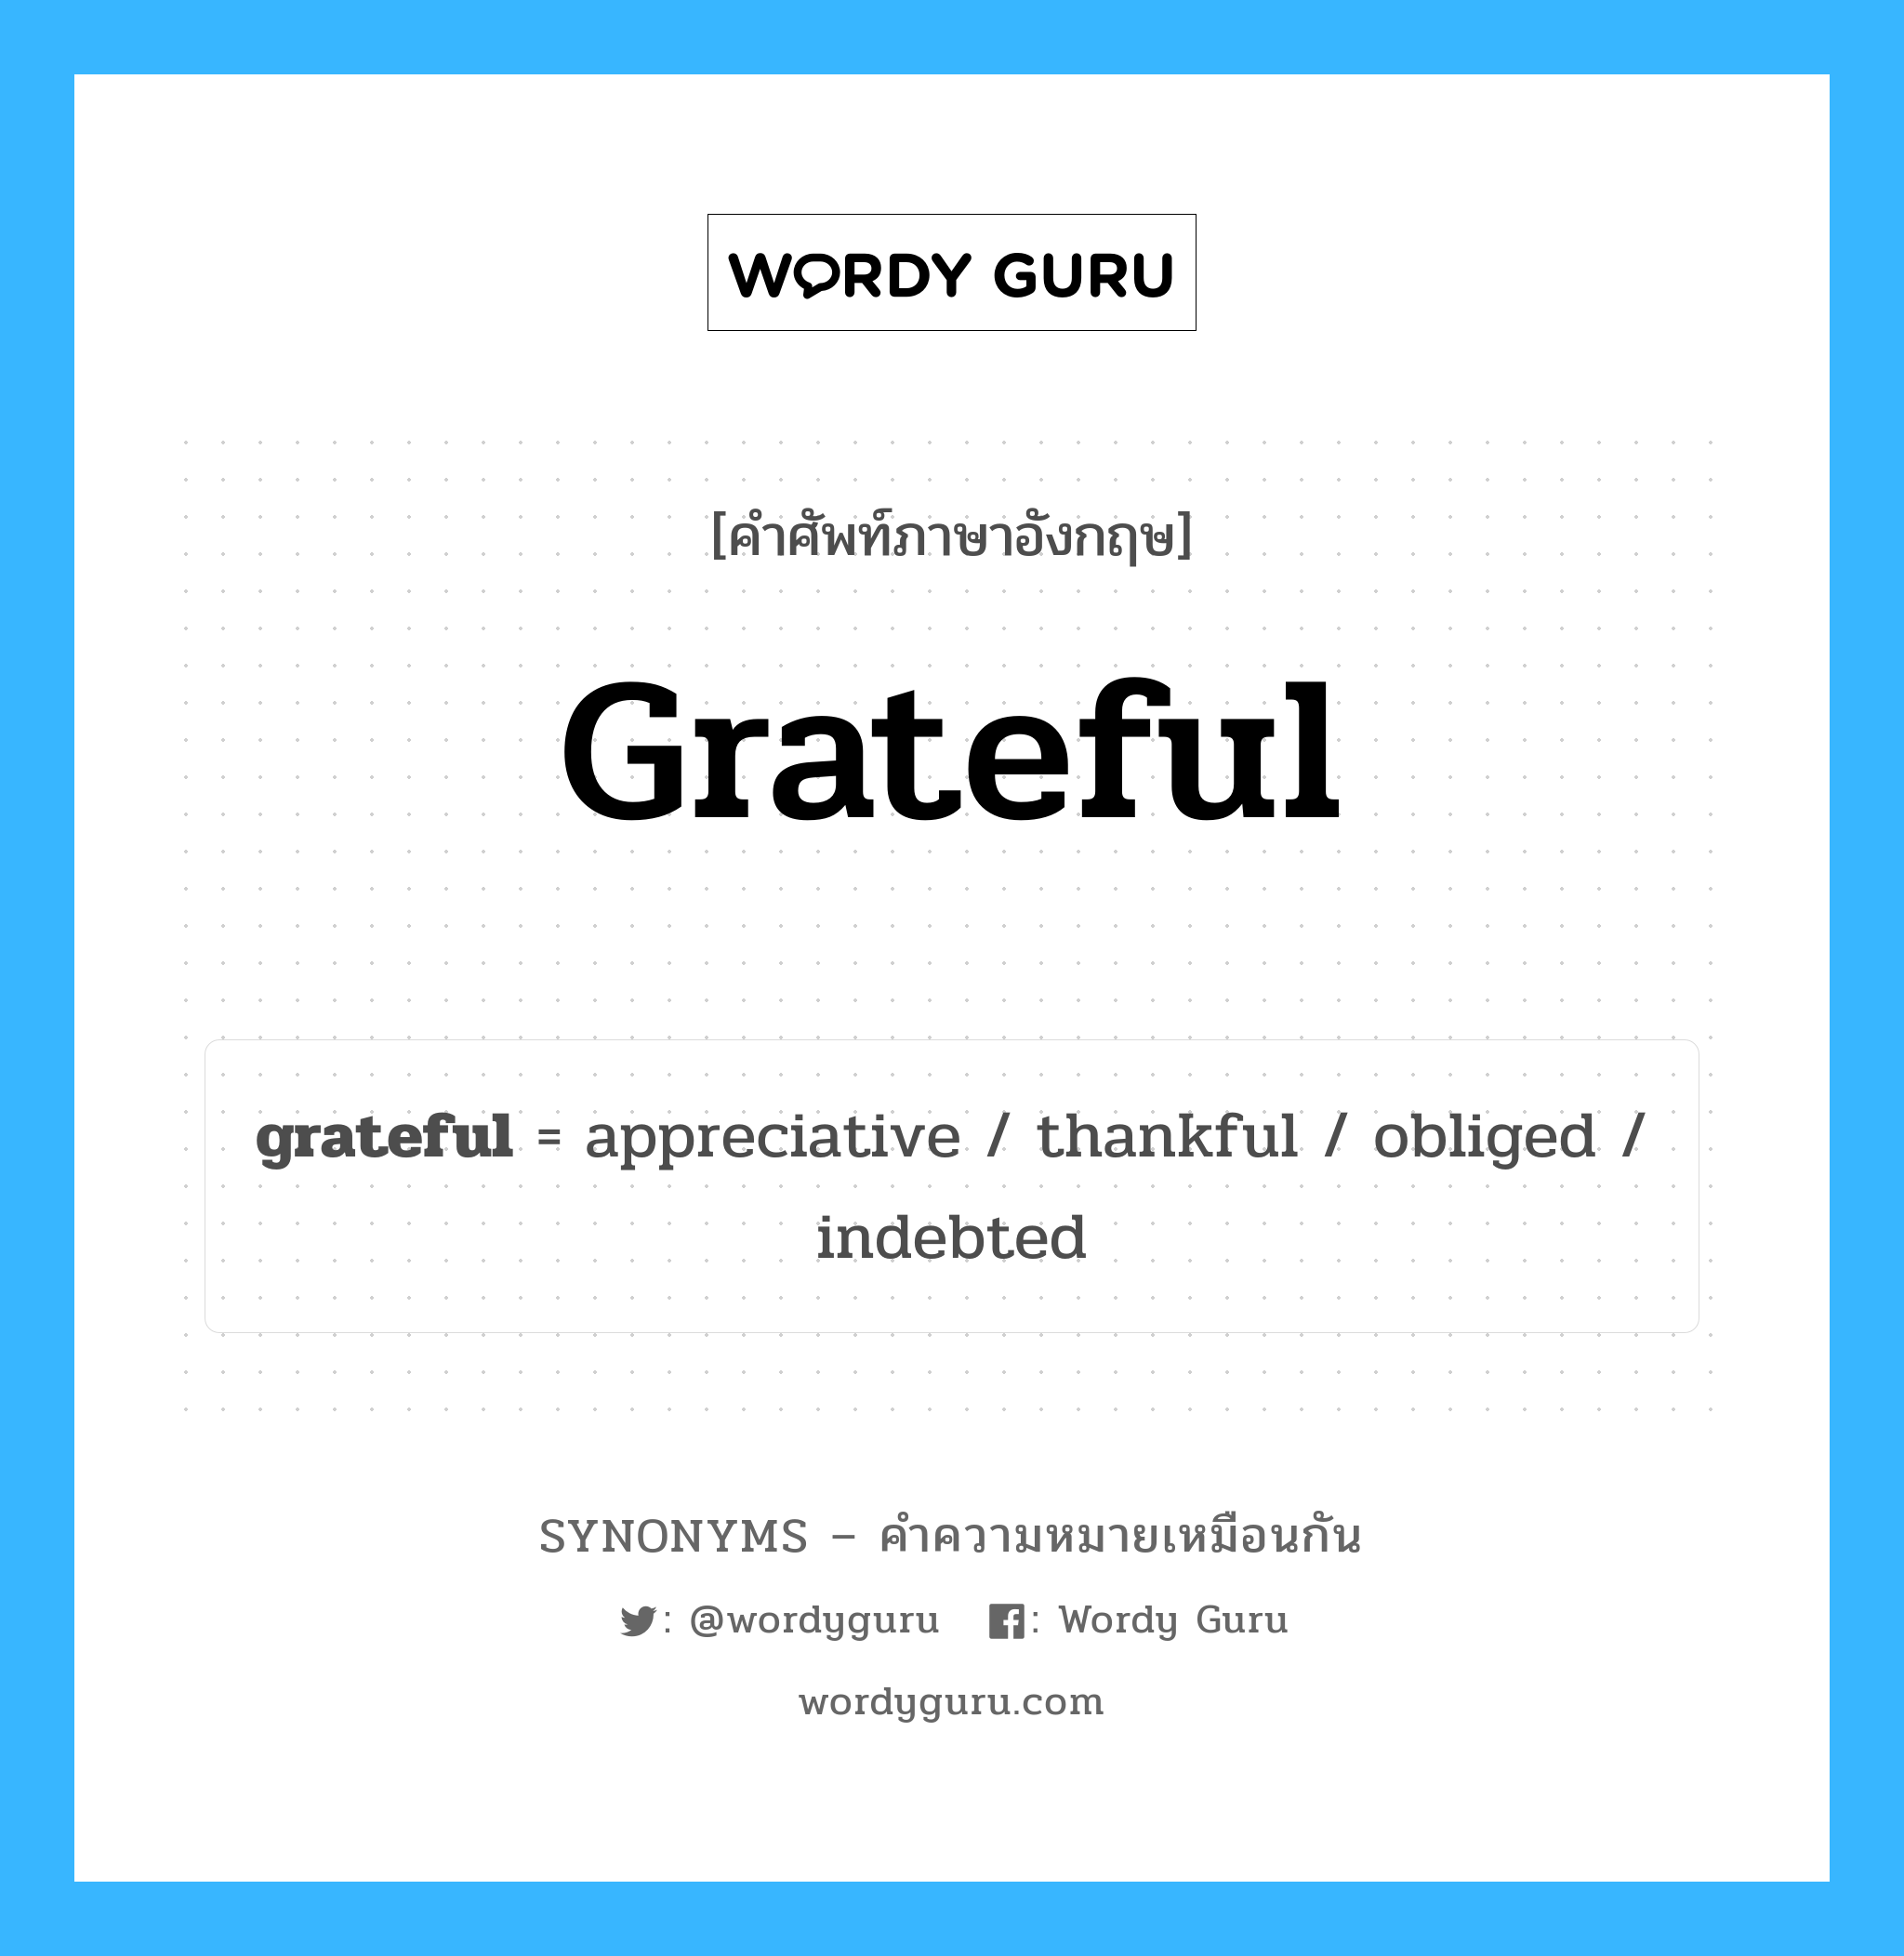 grateful เป็นหนึ่งใน thankful และมีคำอื่น ๆ อีกดังนี้, คำศัพท์ภาษาอังกฤษ grateful ความหมายคล้ายกันกับ thankful แปลว่า ขอบคุณ หมวด thankful